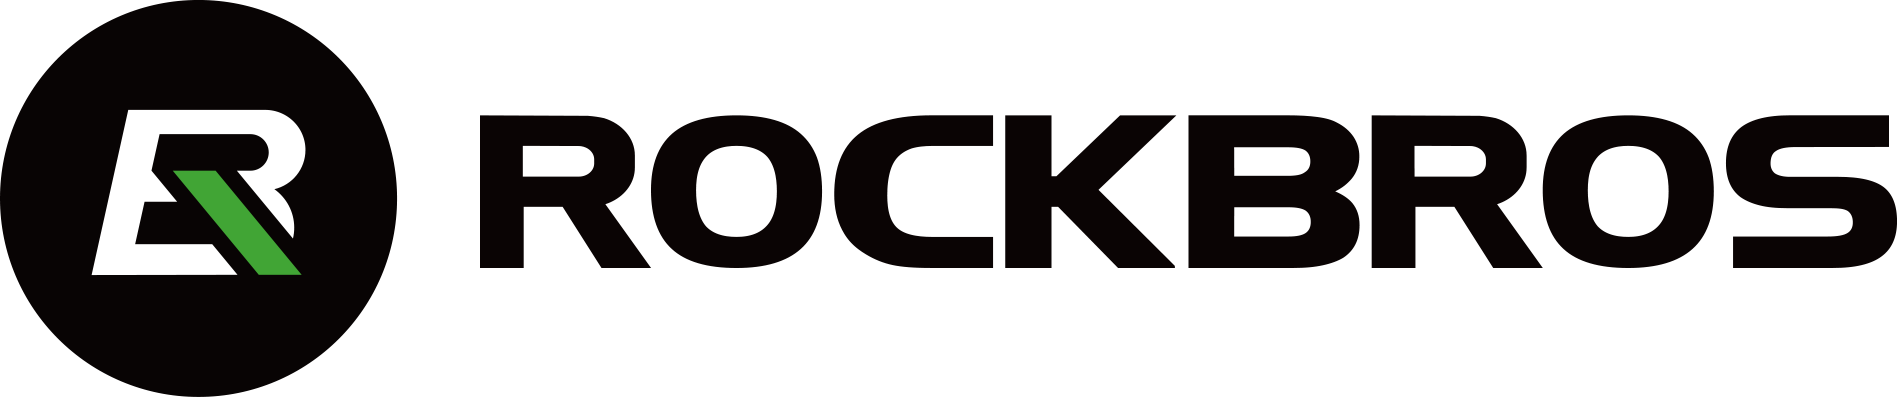 Rockbros logo